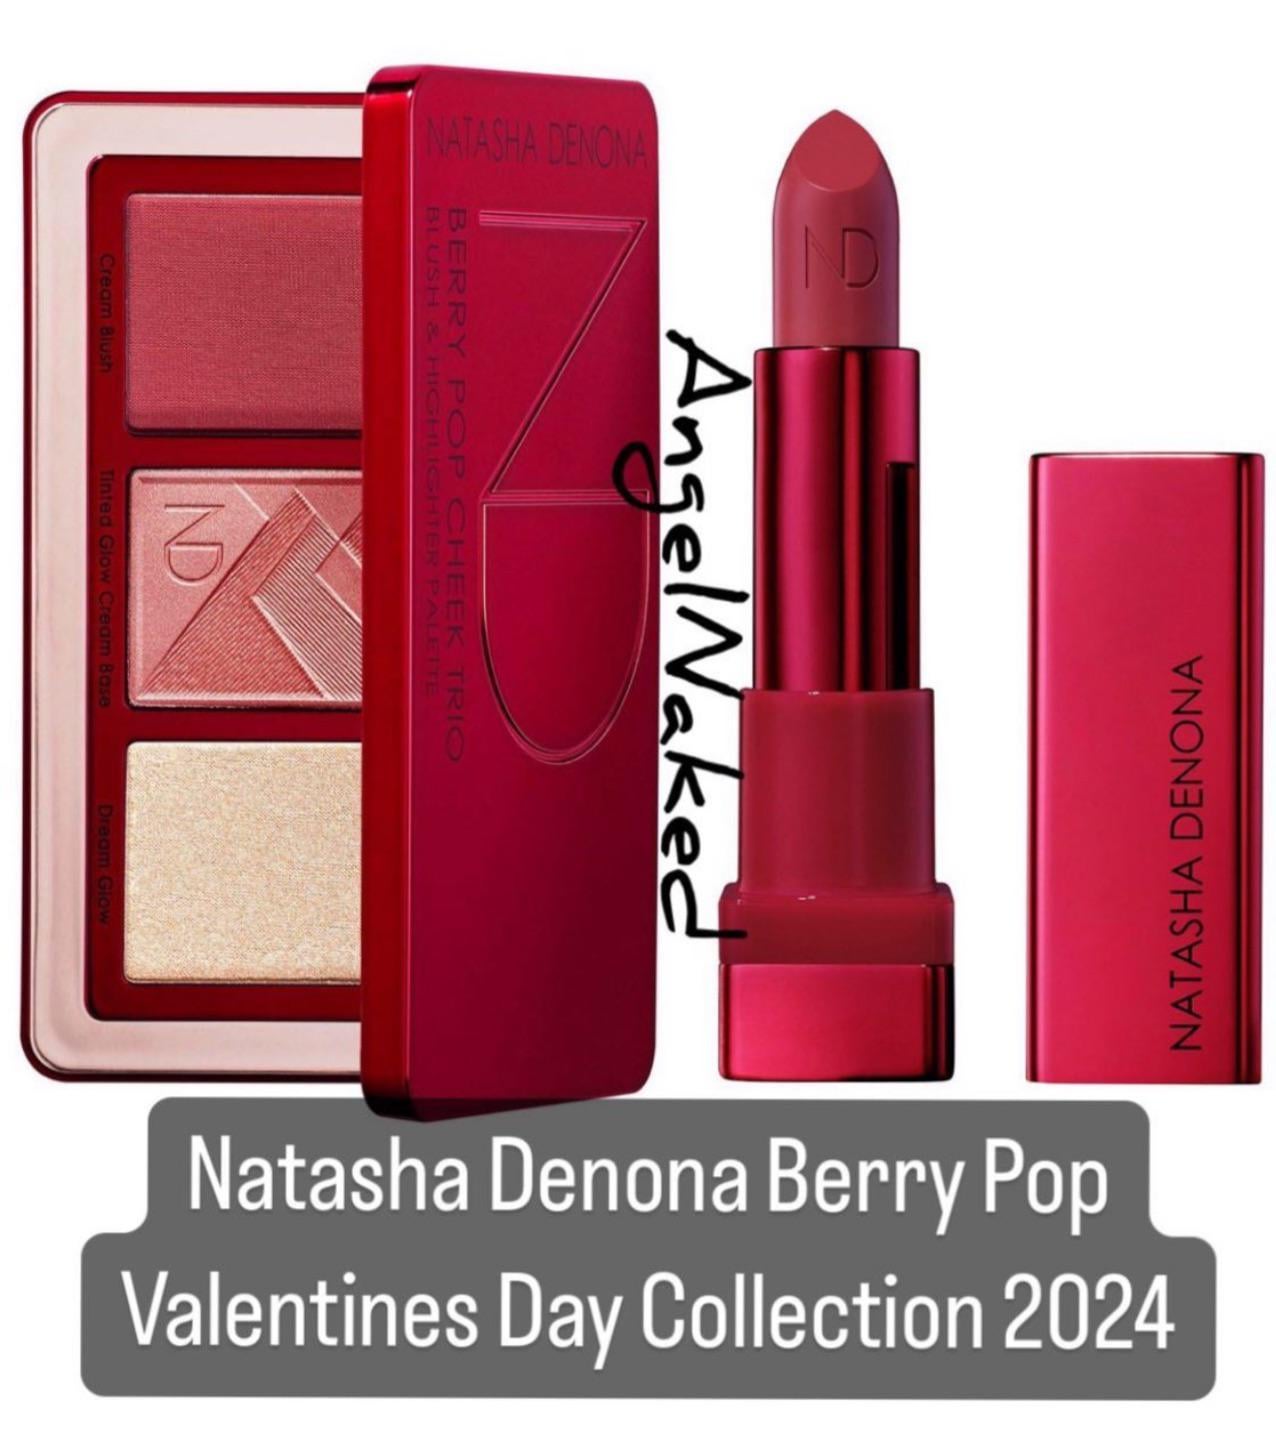 Natasha Denona Valentine’s Day collection 2024 Beauty